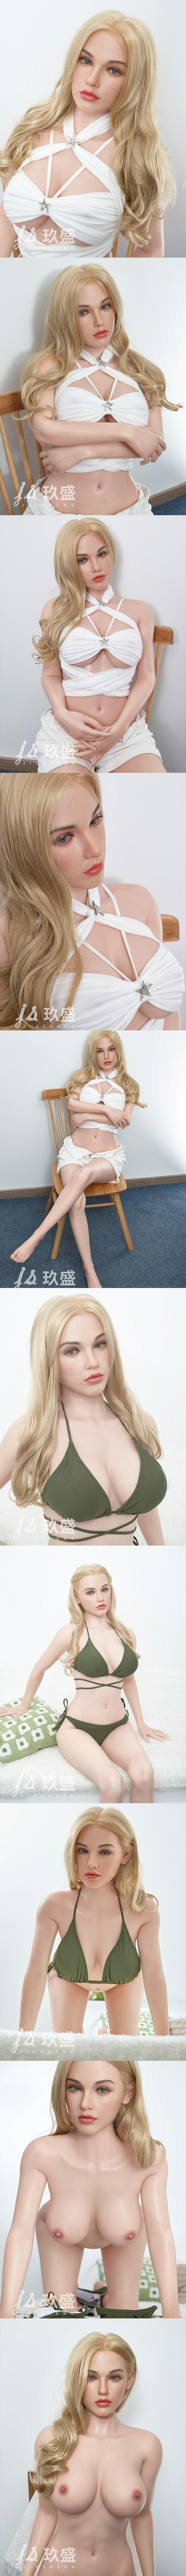 玖盛矽膠娃娃 全矽膠 160cm Lisa jiusheng silicone sex doll